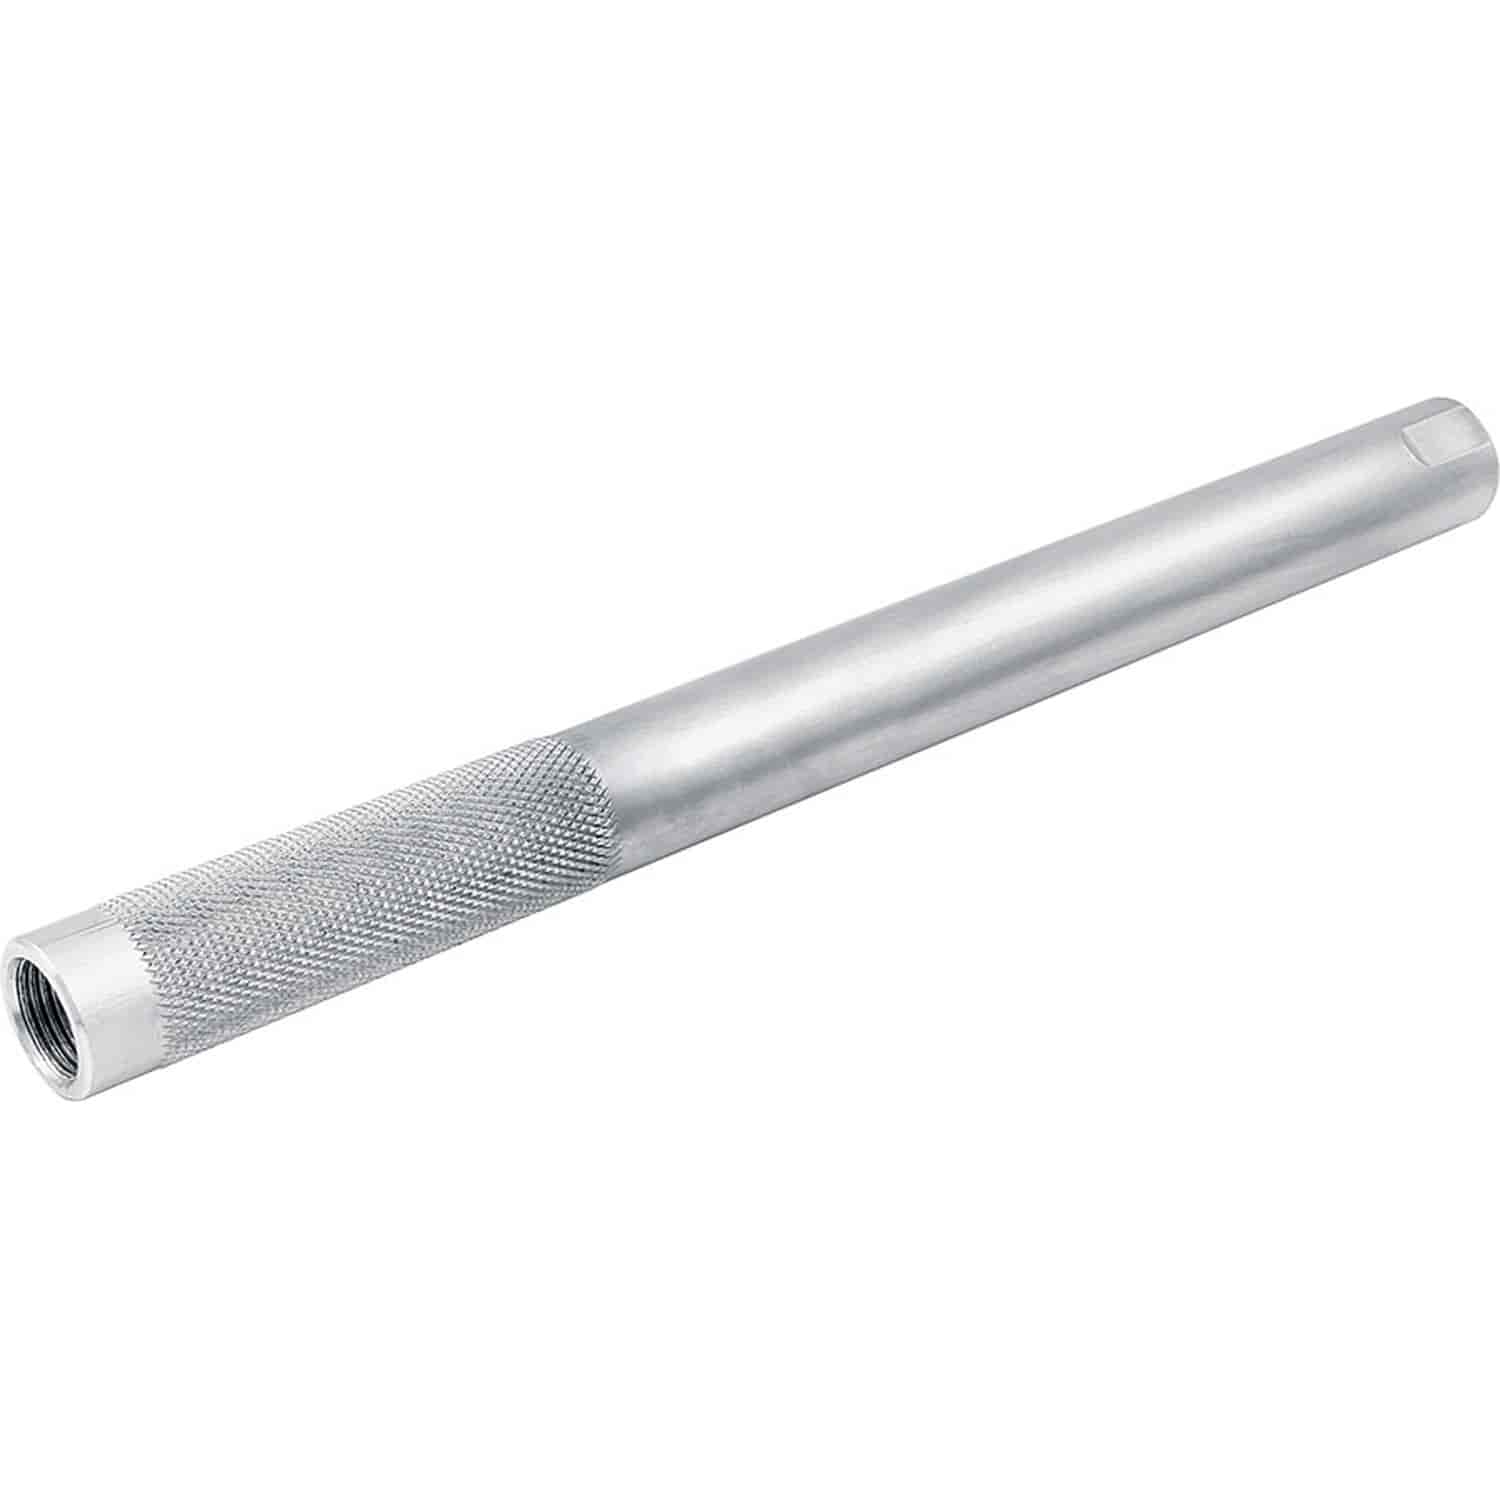 Swedged Aluminum Tie Rod Tube Length: 8